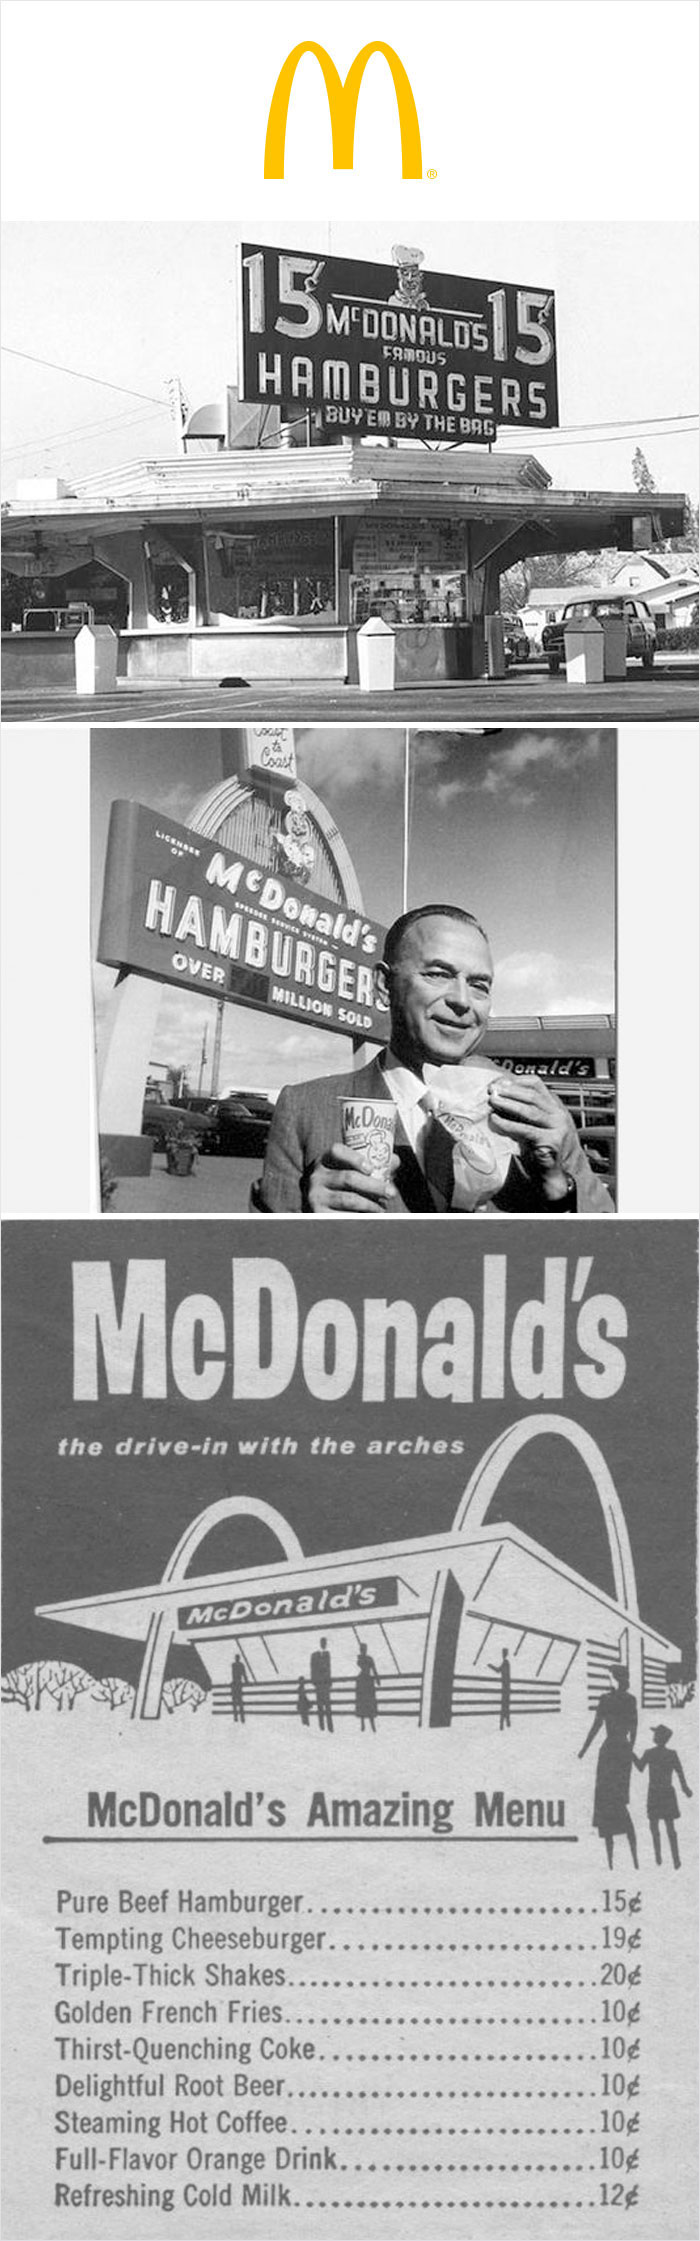 Fast-Food Restaurant (1955)